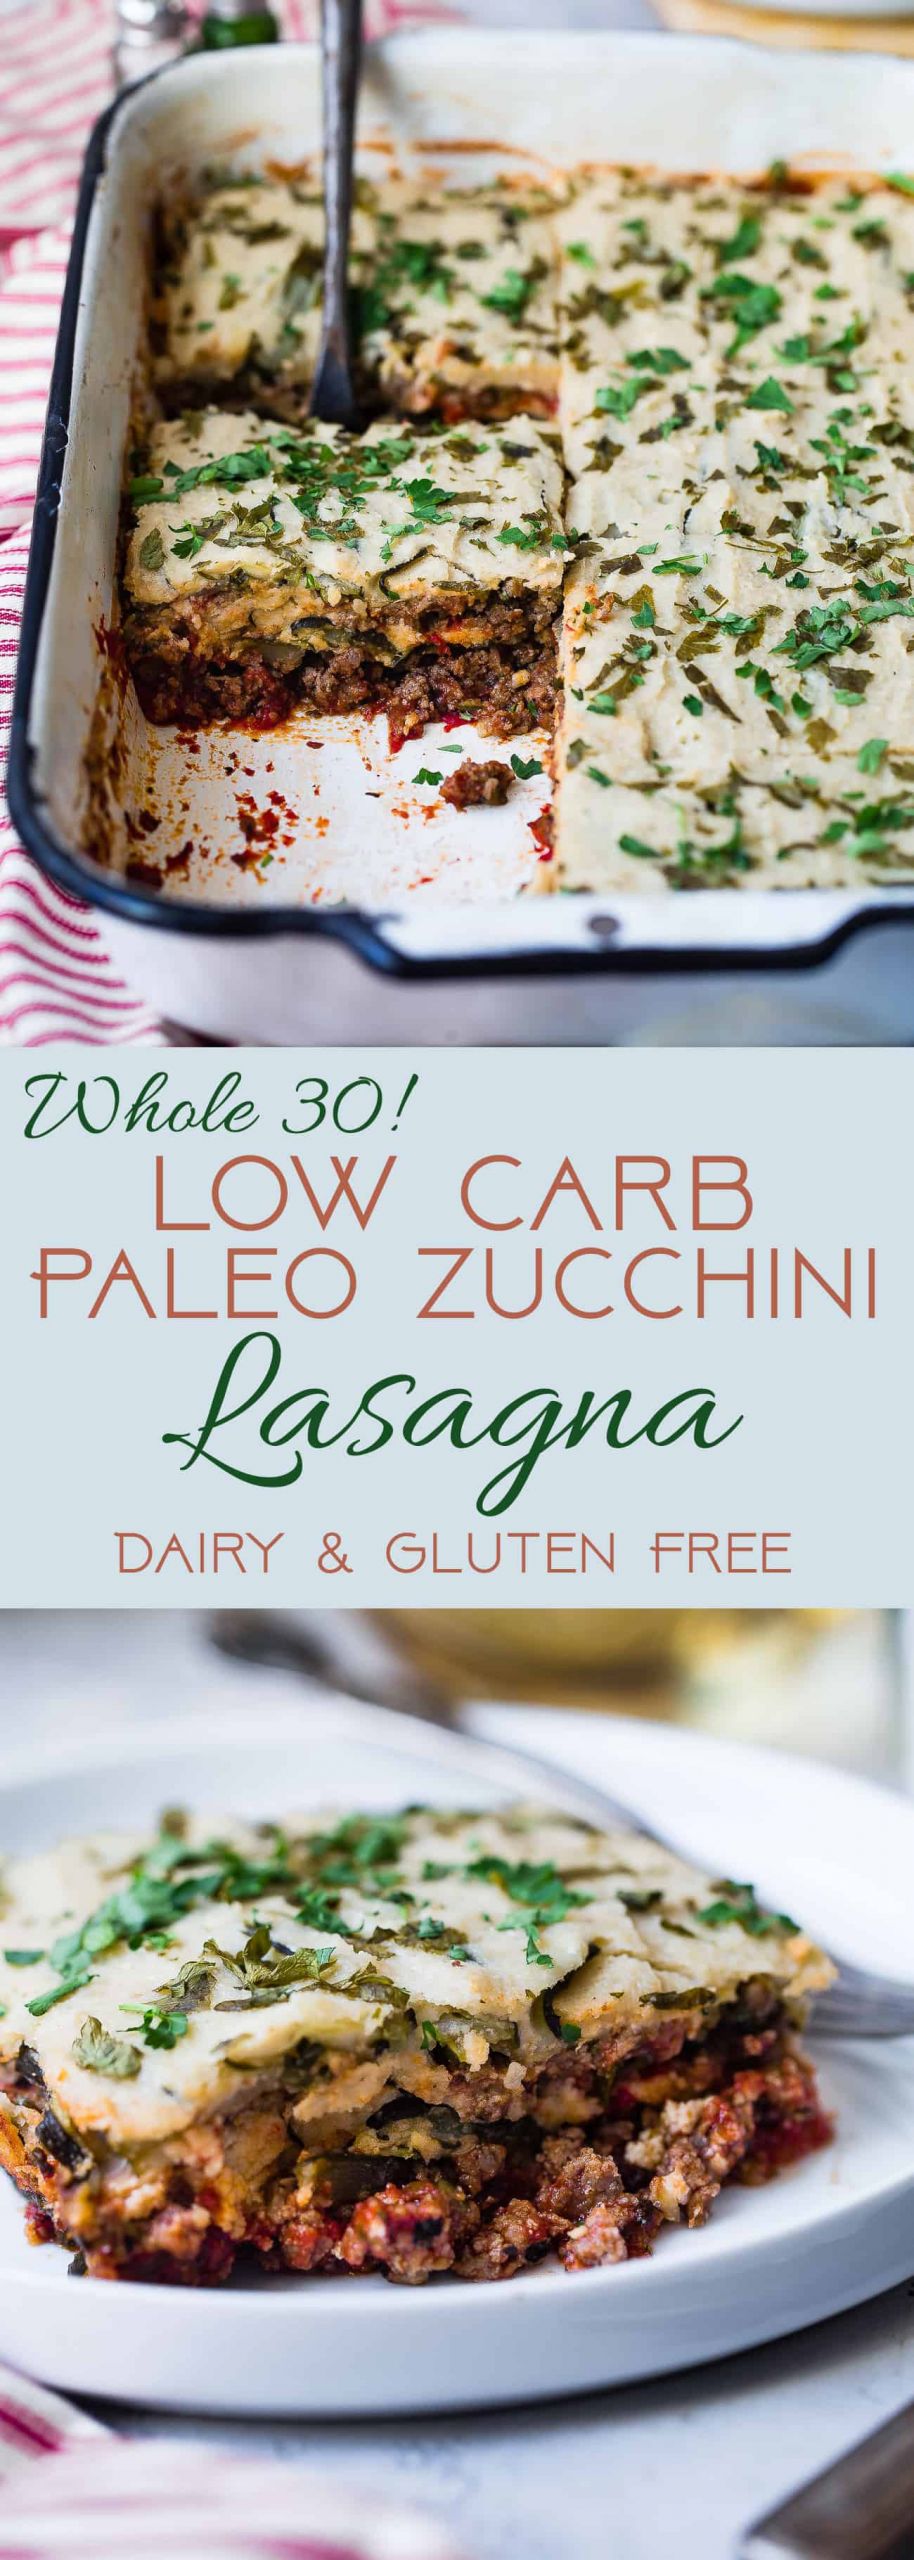 Low Carb Zucchini Lasagna
 Low Carb Paleo Zucchini Lasagna